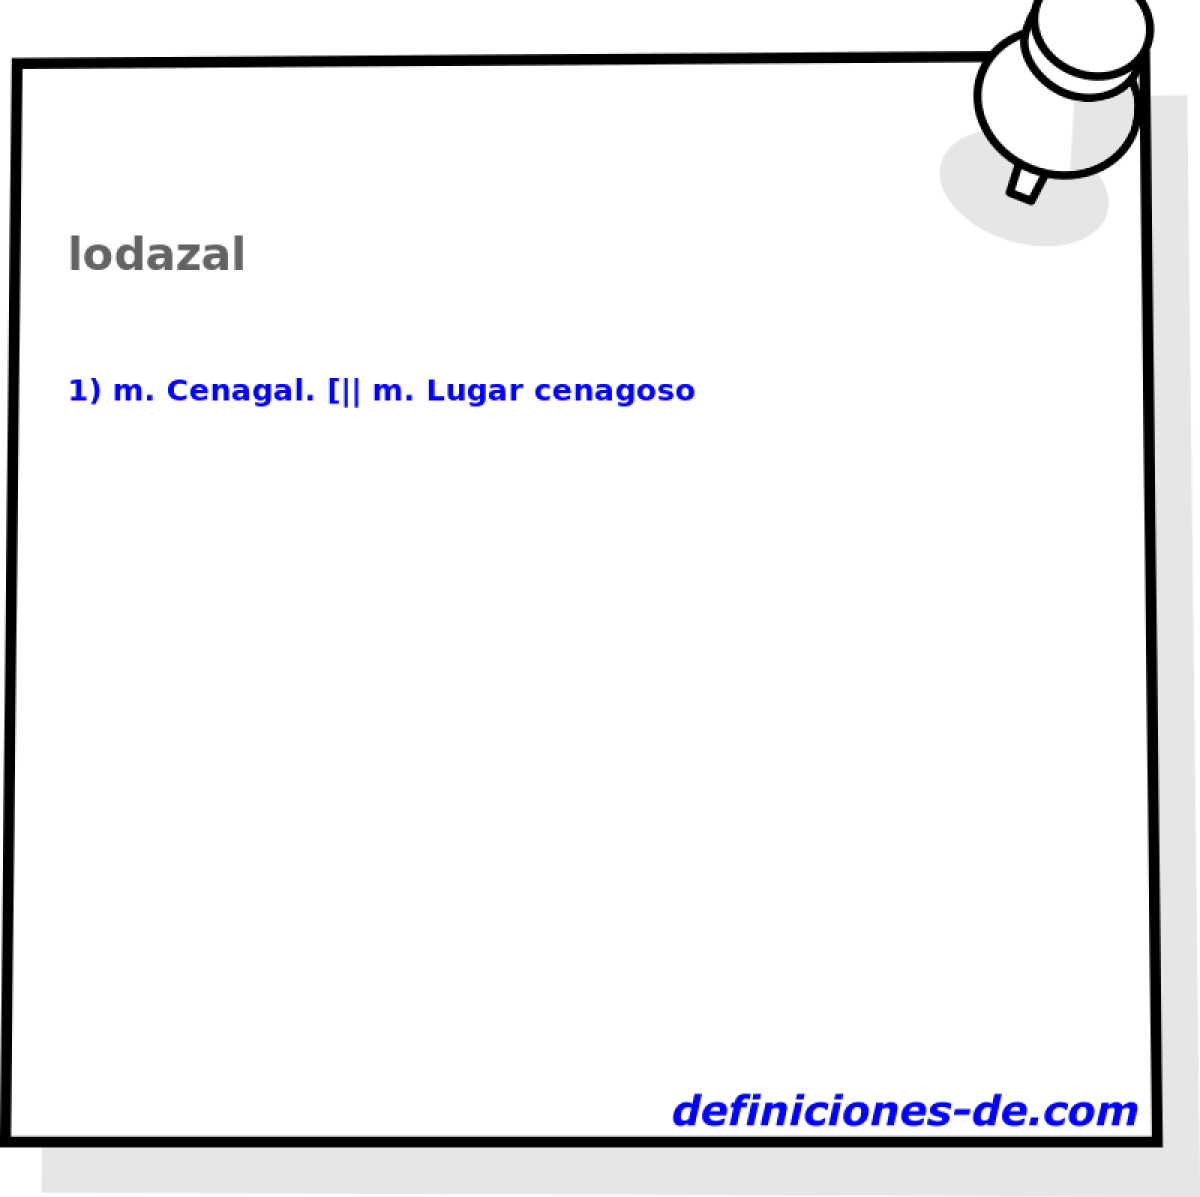 lodazal 